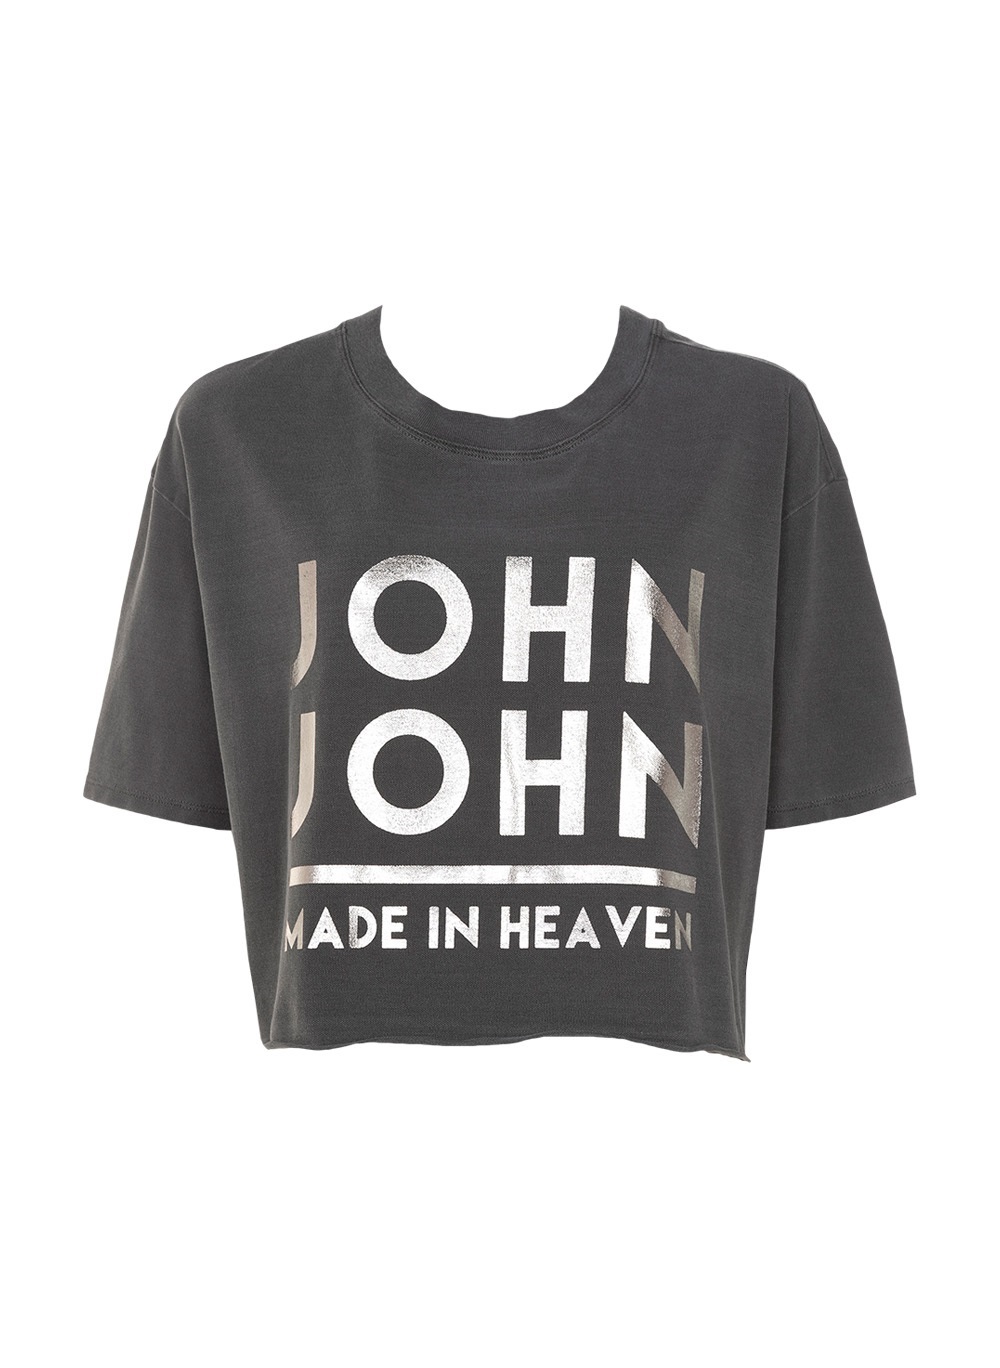 Camiseta John John Basic Off Feminina 03.02.1819 - Camiseta John